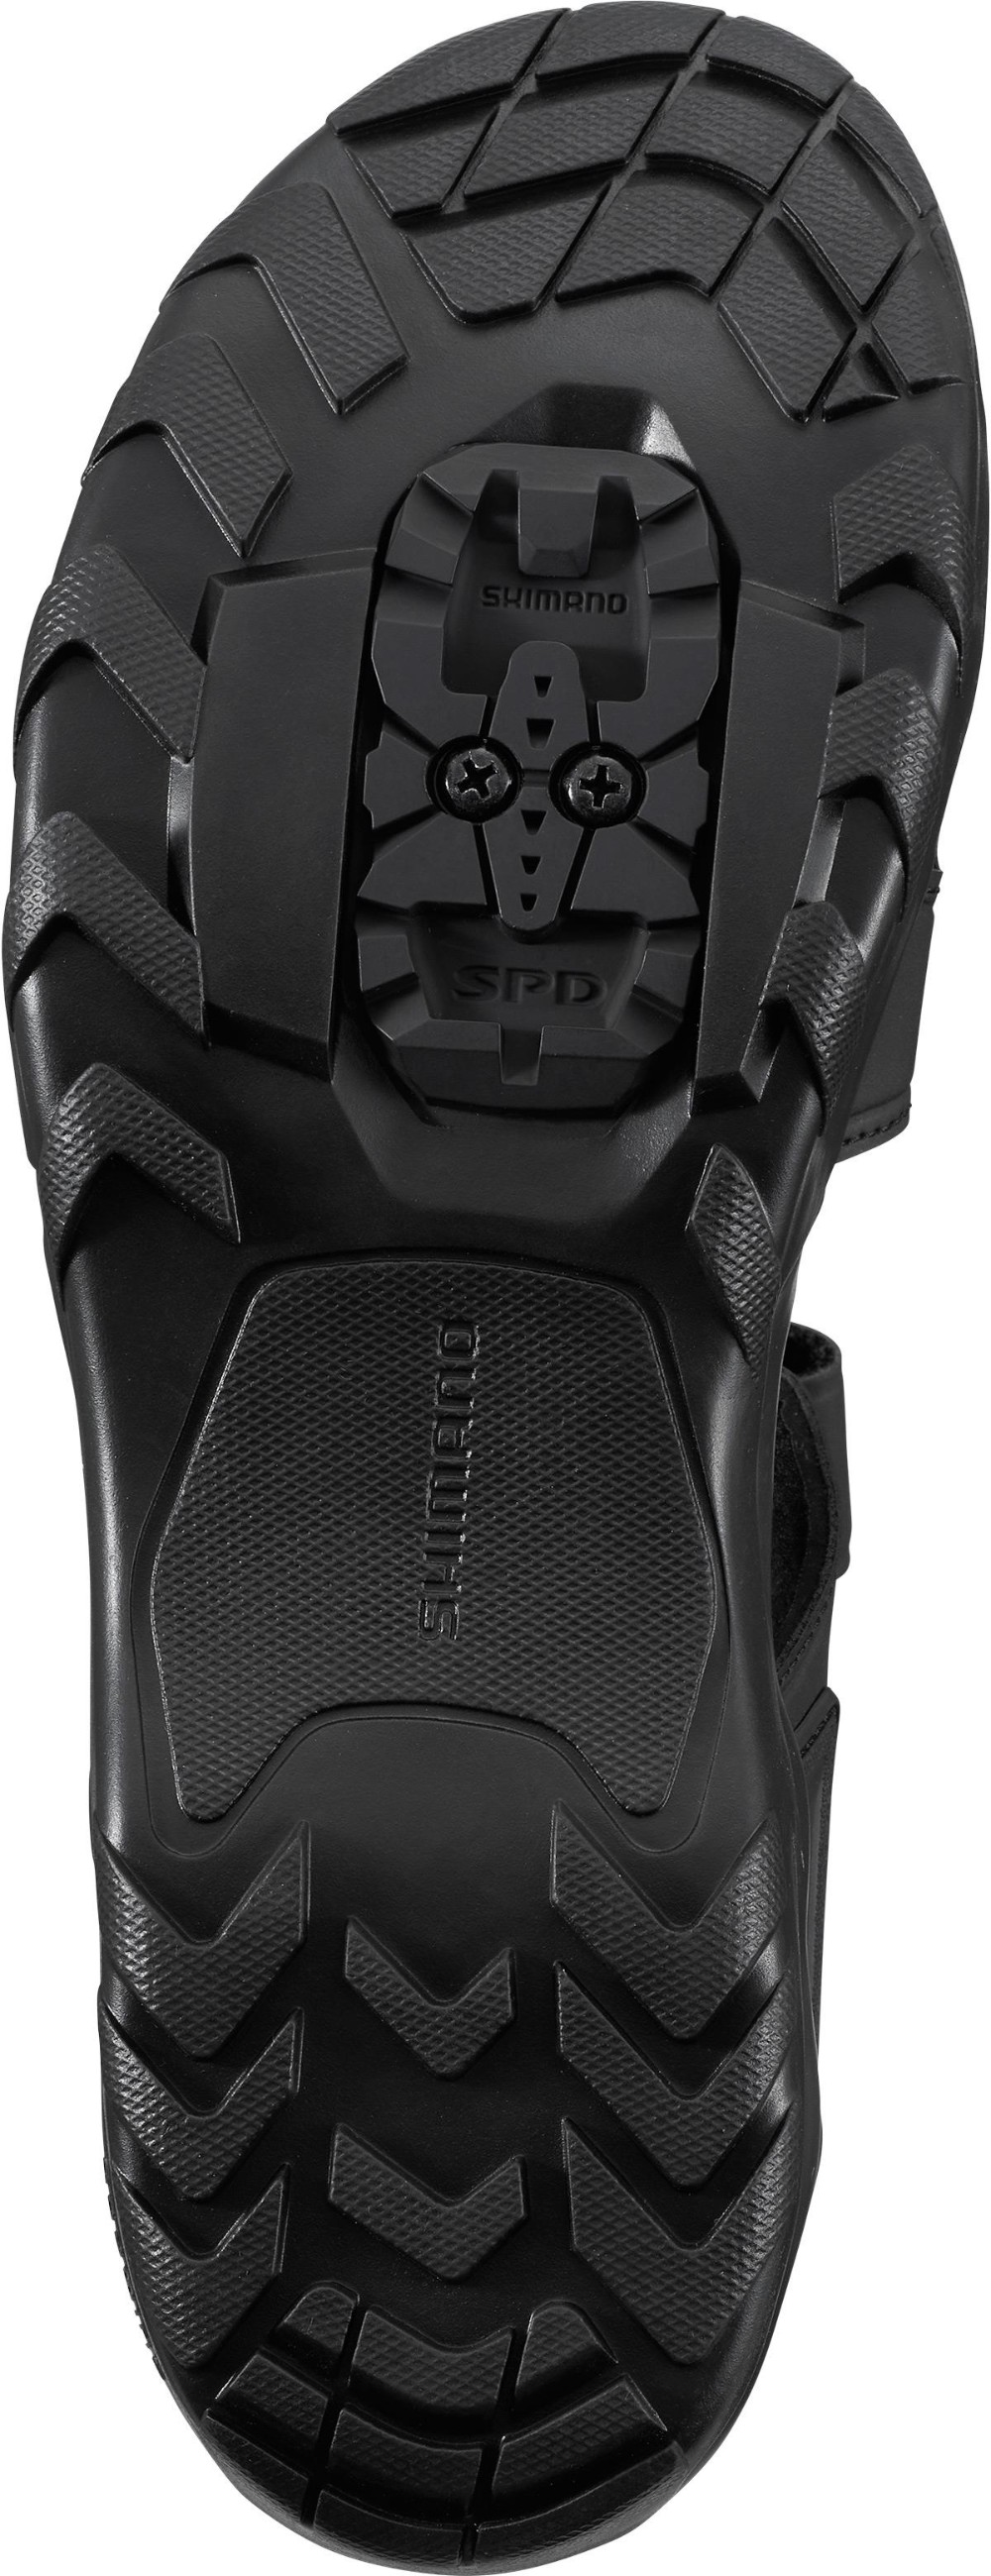 SD5 (SD501) SPD MTB Sandals image 2